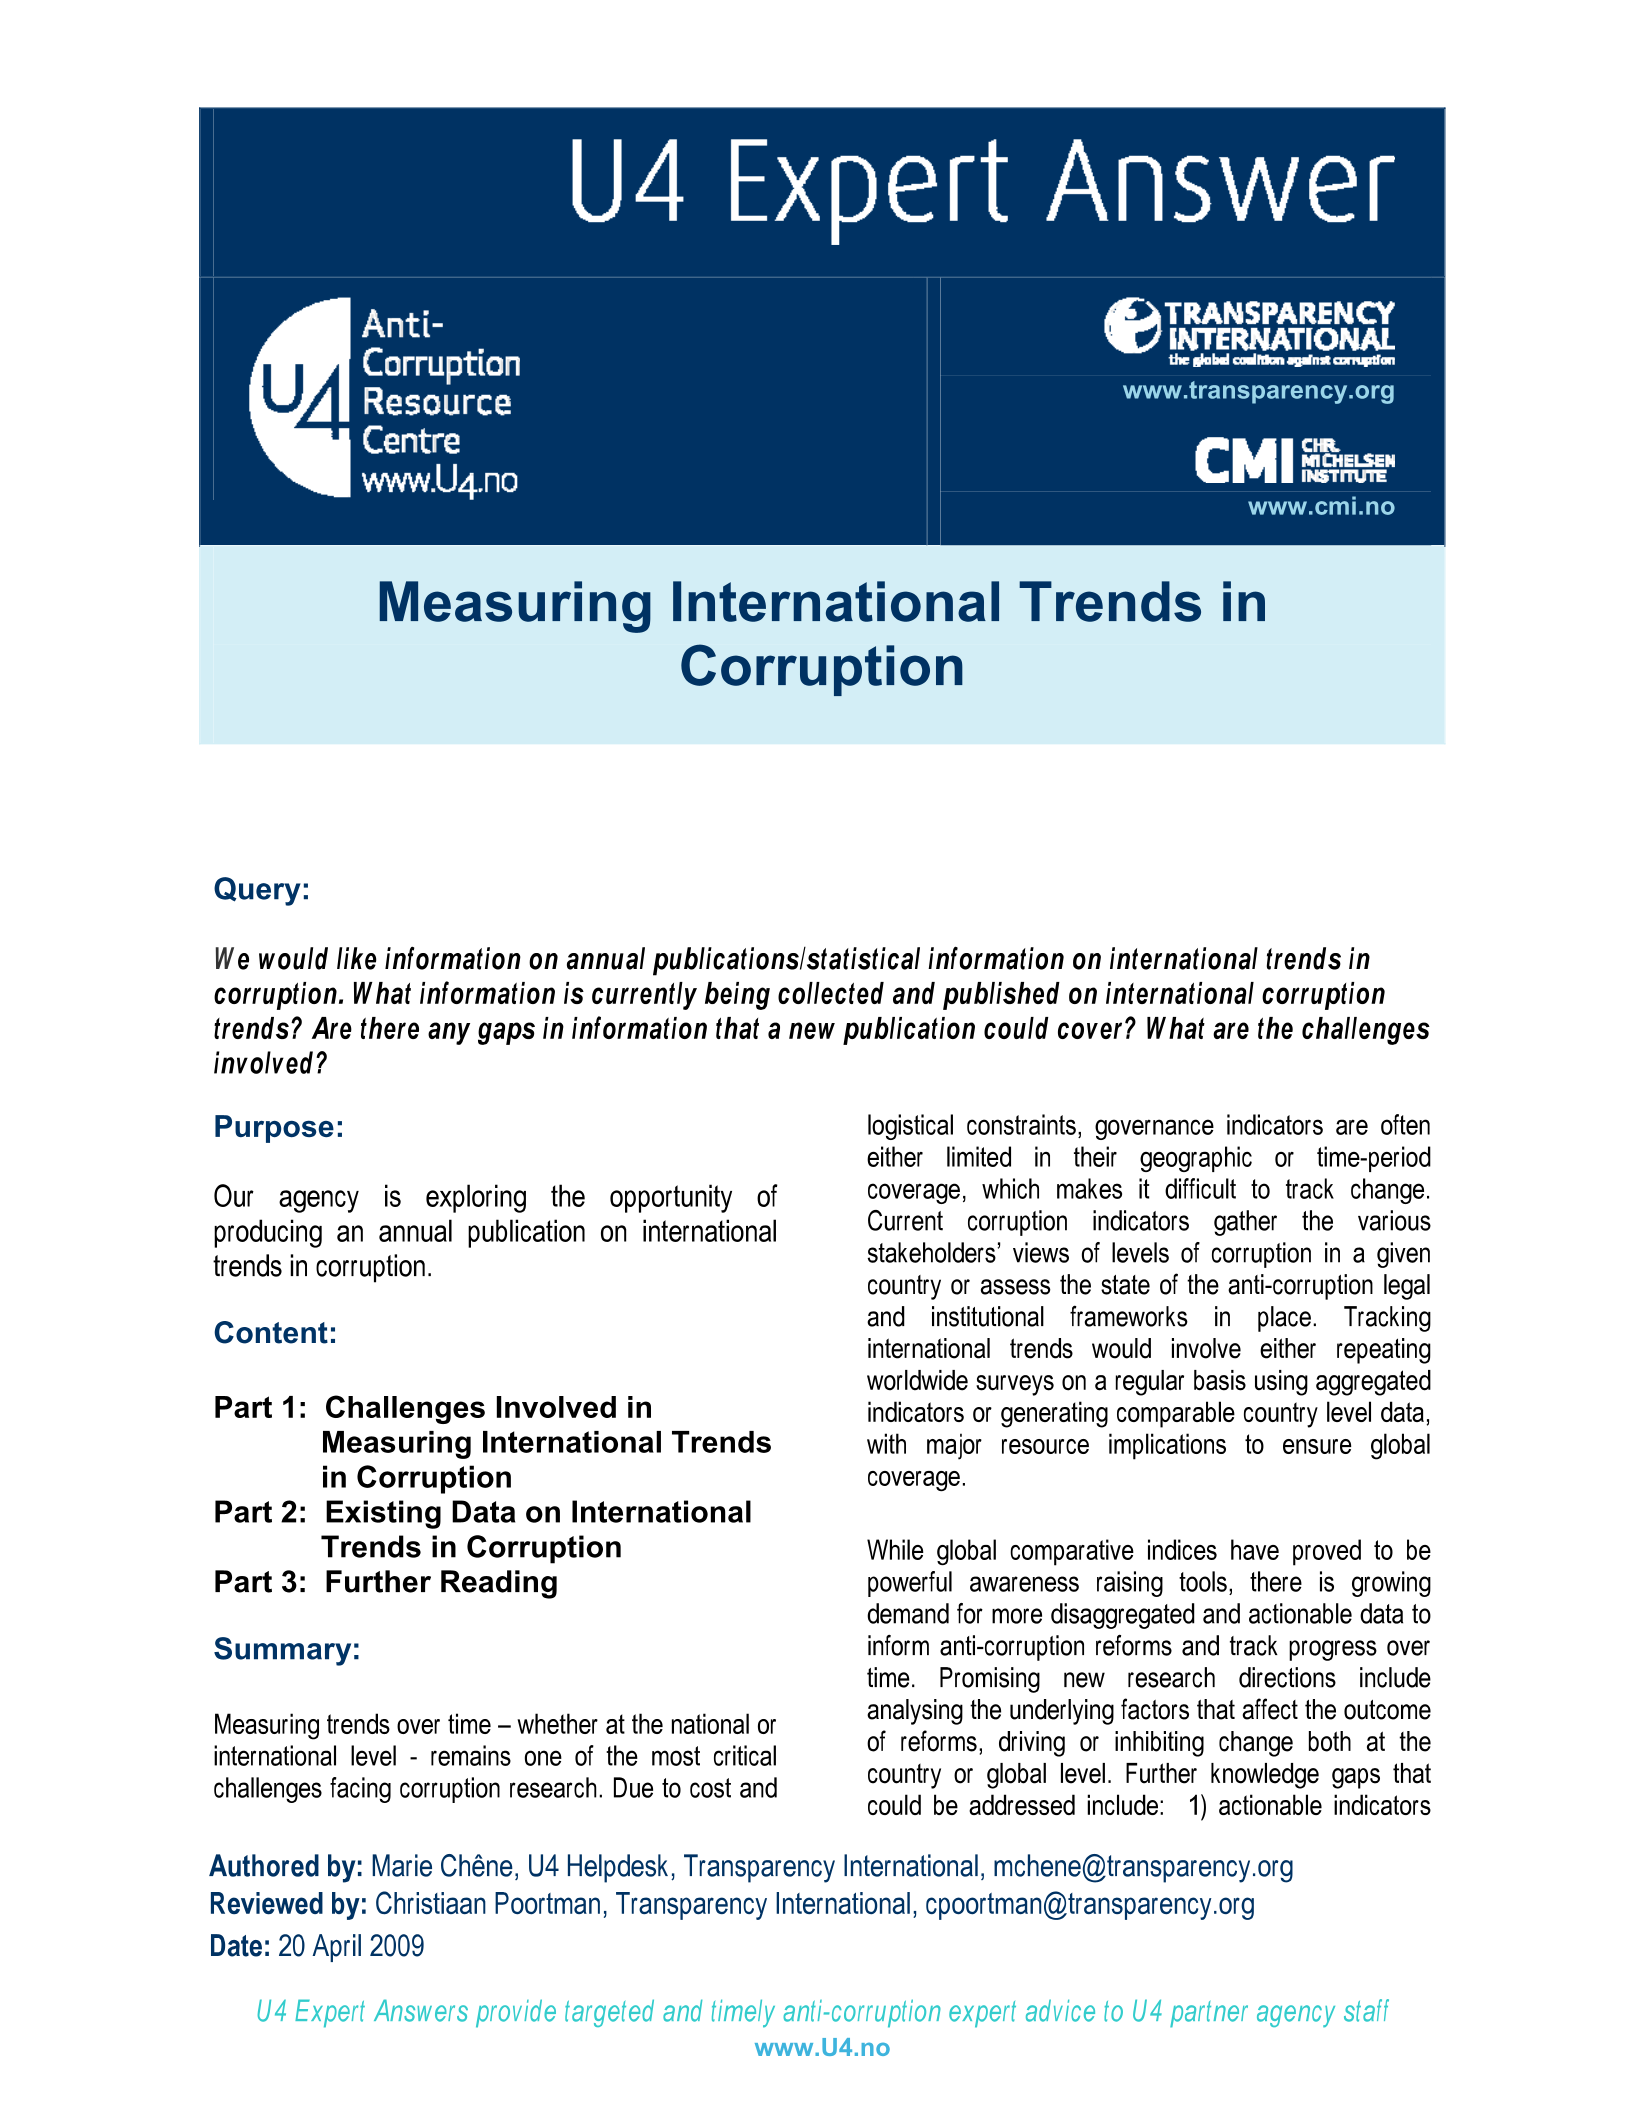 Measuring international trends in corruption